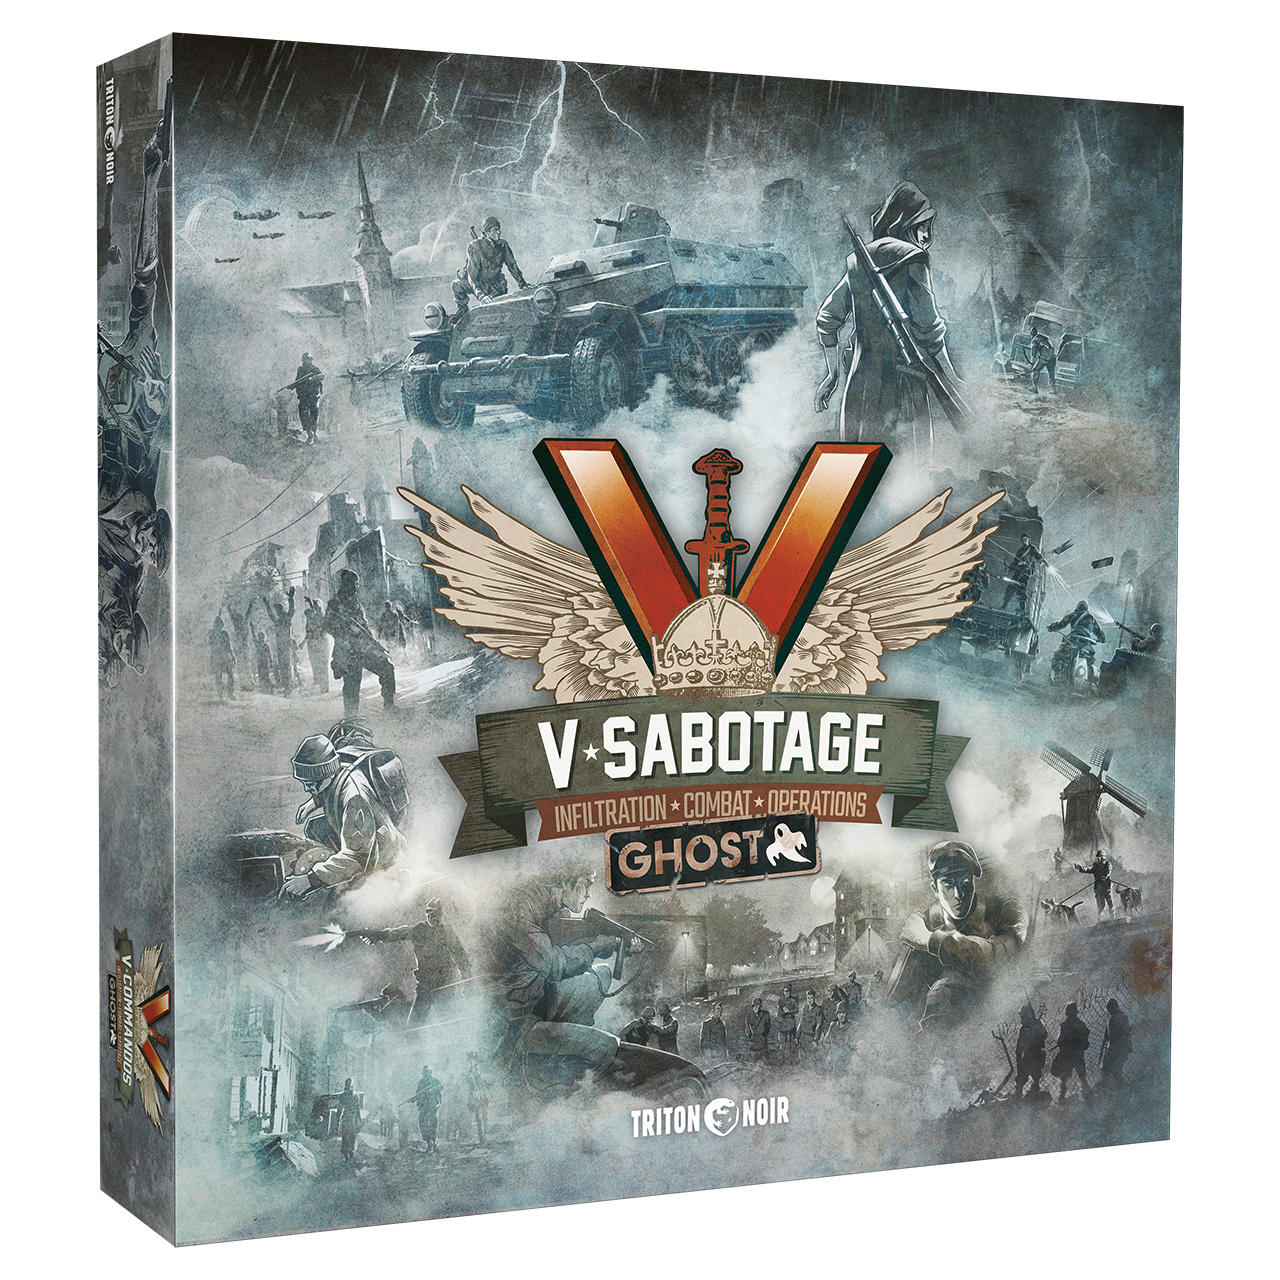 V-Sabotage Deluxe by Triton Noir - Ghost expansion - Gamefound